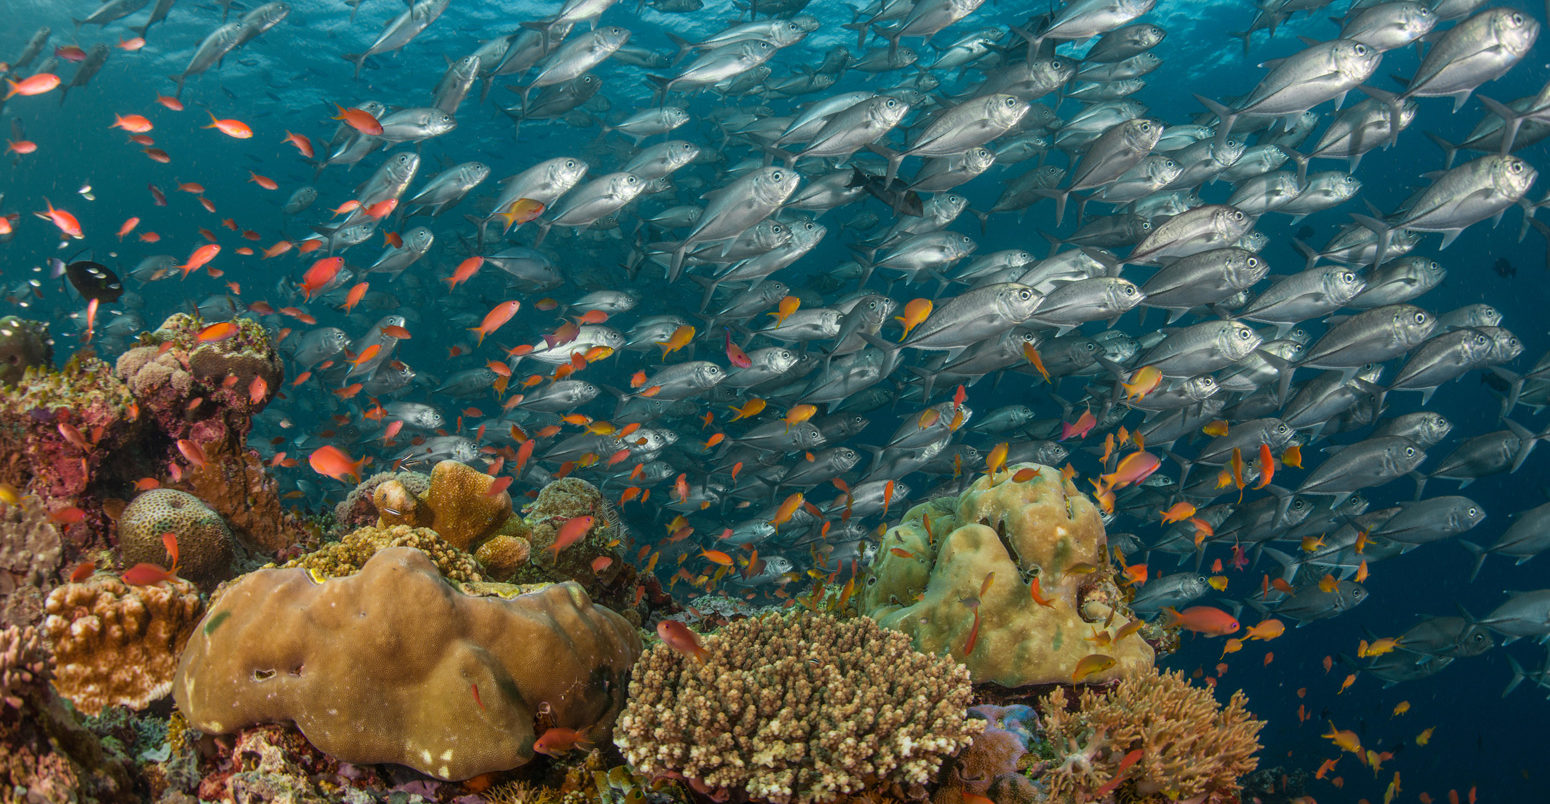 School of big-eye jacks, coral reef and orange anthias fish, Sabah, Malaysian Borneo. Credit: Christian Loader / Alamy Stock Photo